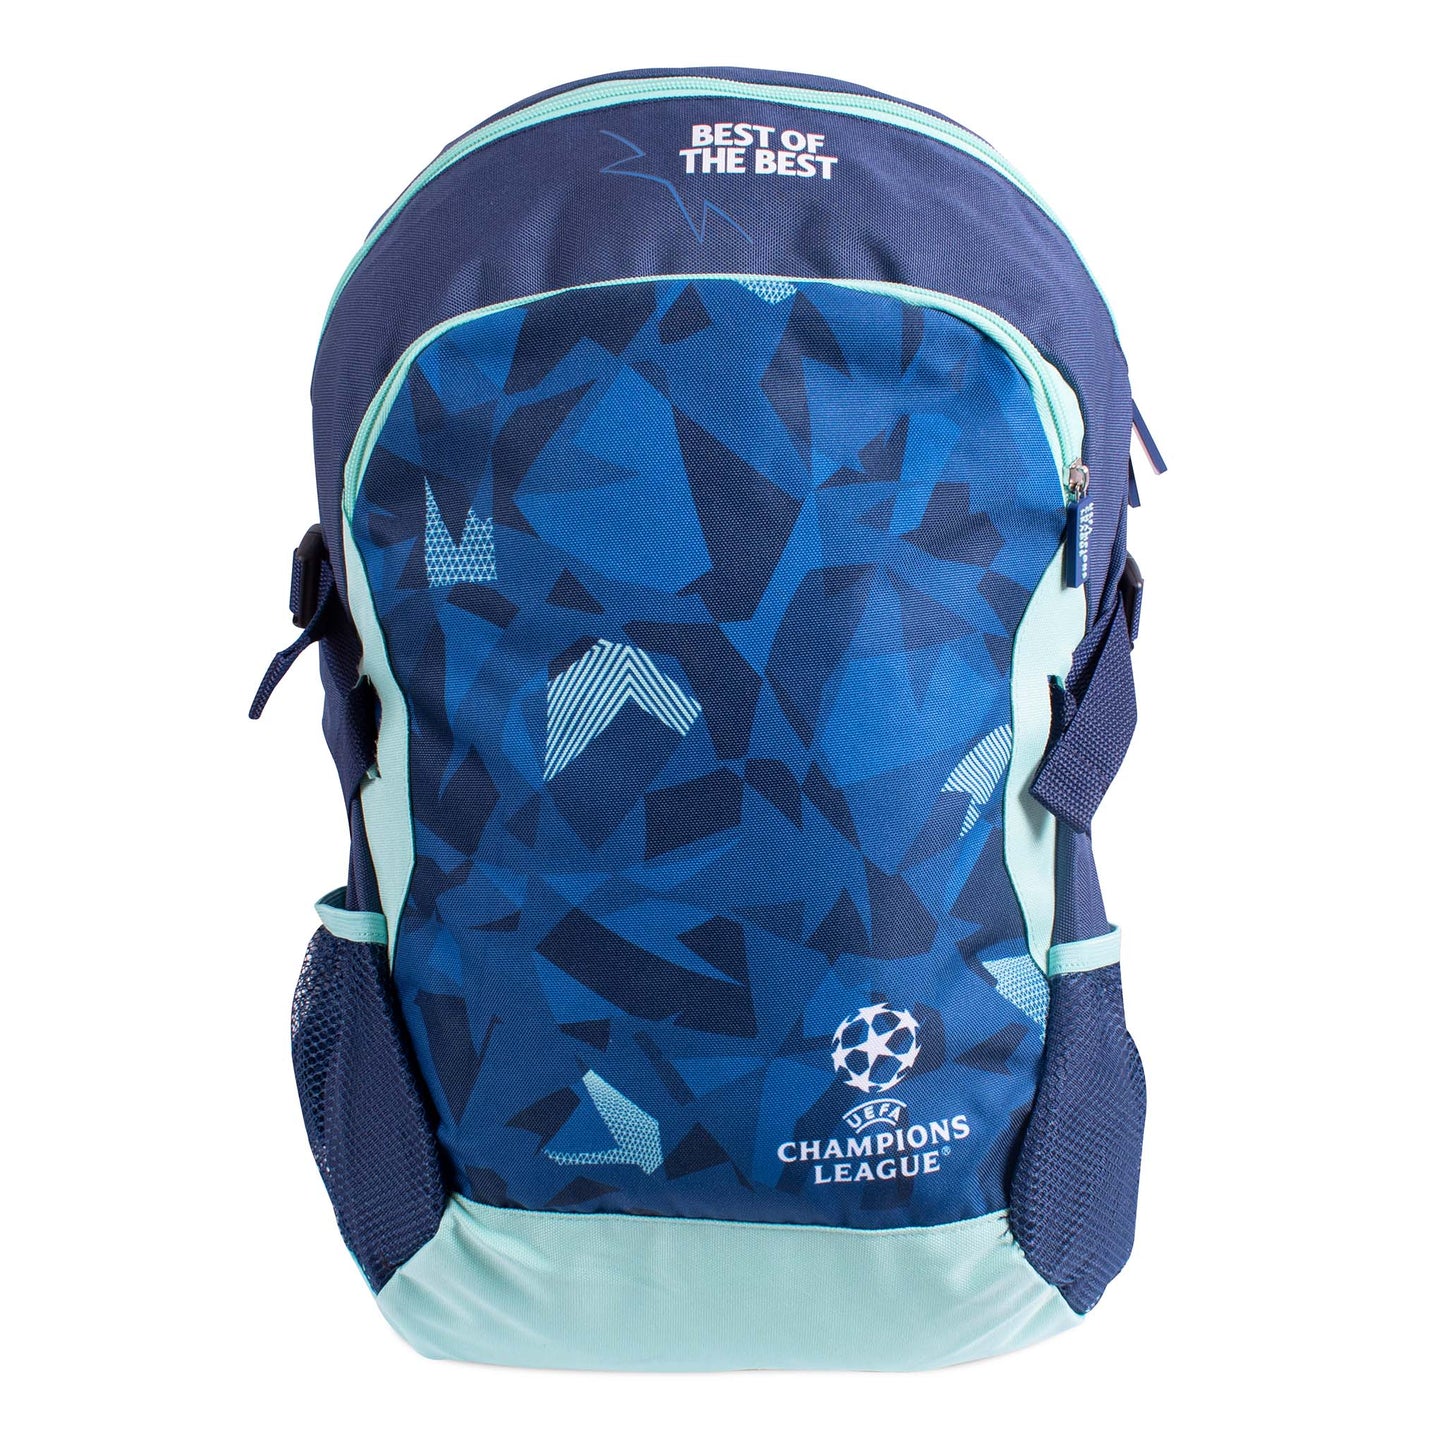 UEFA Champions League Premium Backpack